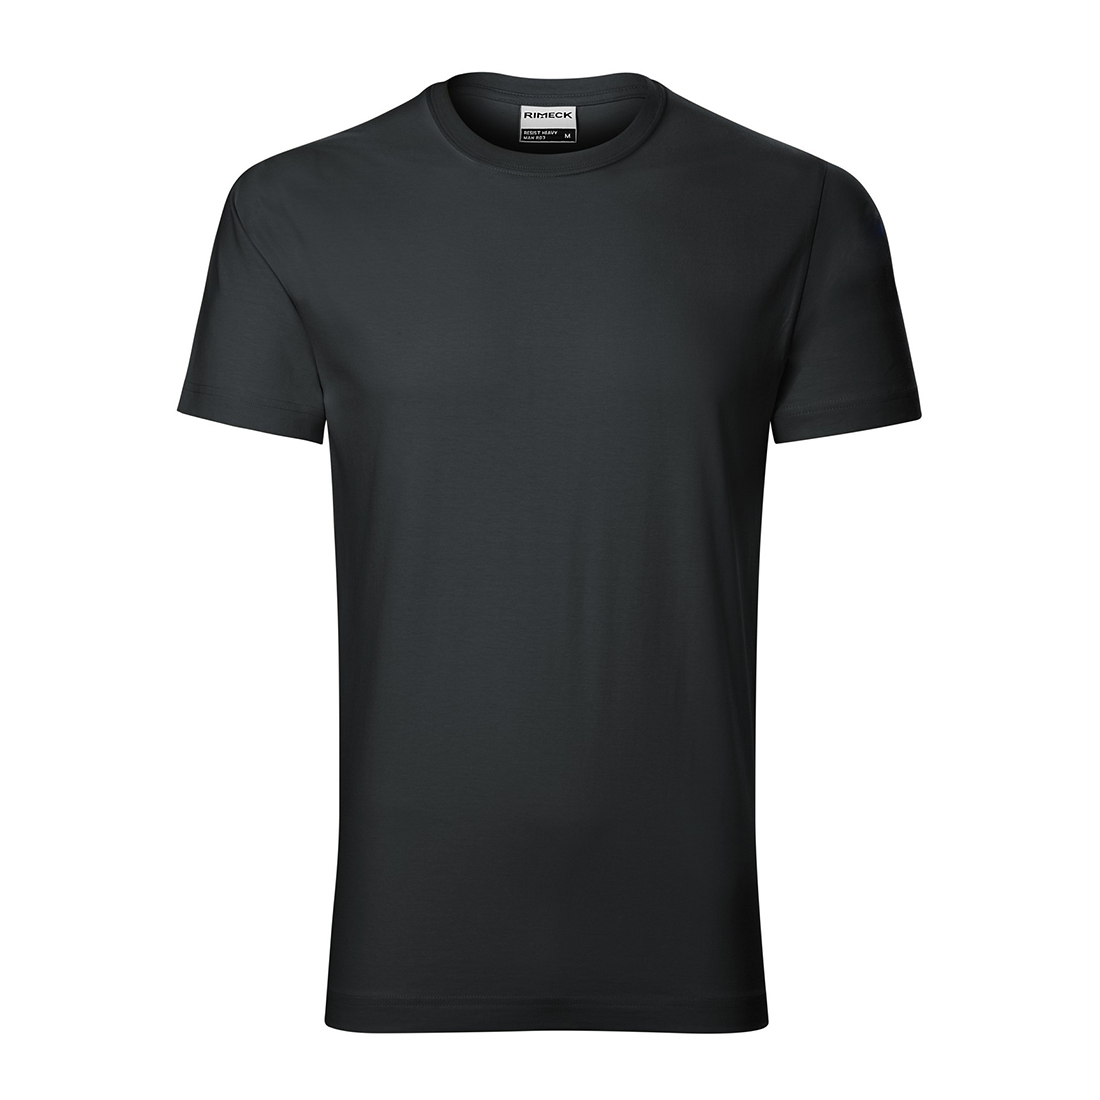 Men's Pre-shrunk Cotton T-shirt - Safetywear